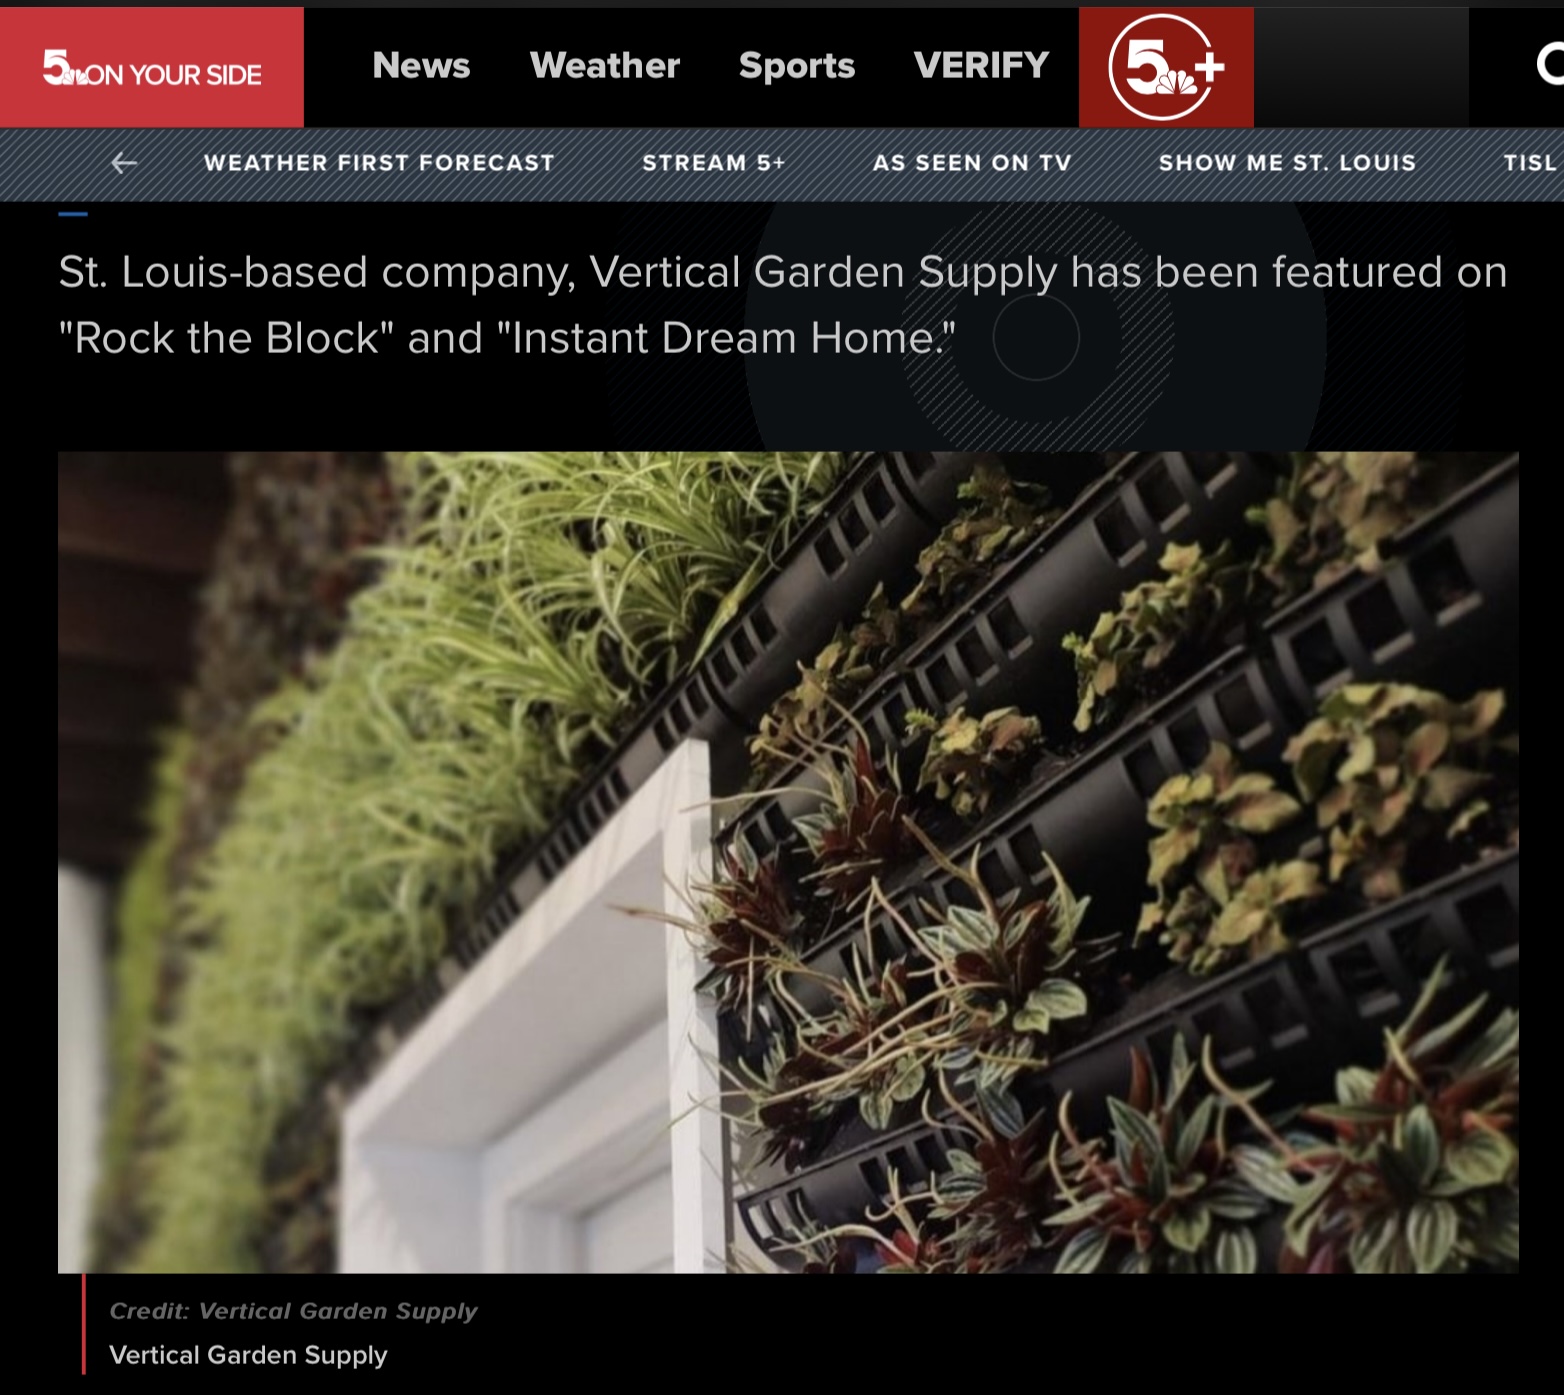 KSDK news story on Verdtech, Inc and Varden vertical gardens